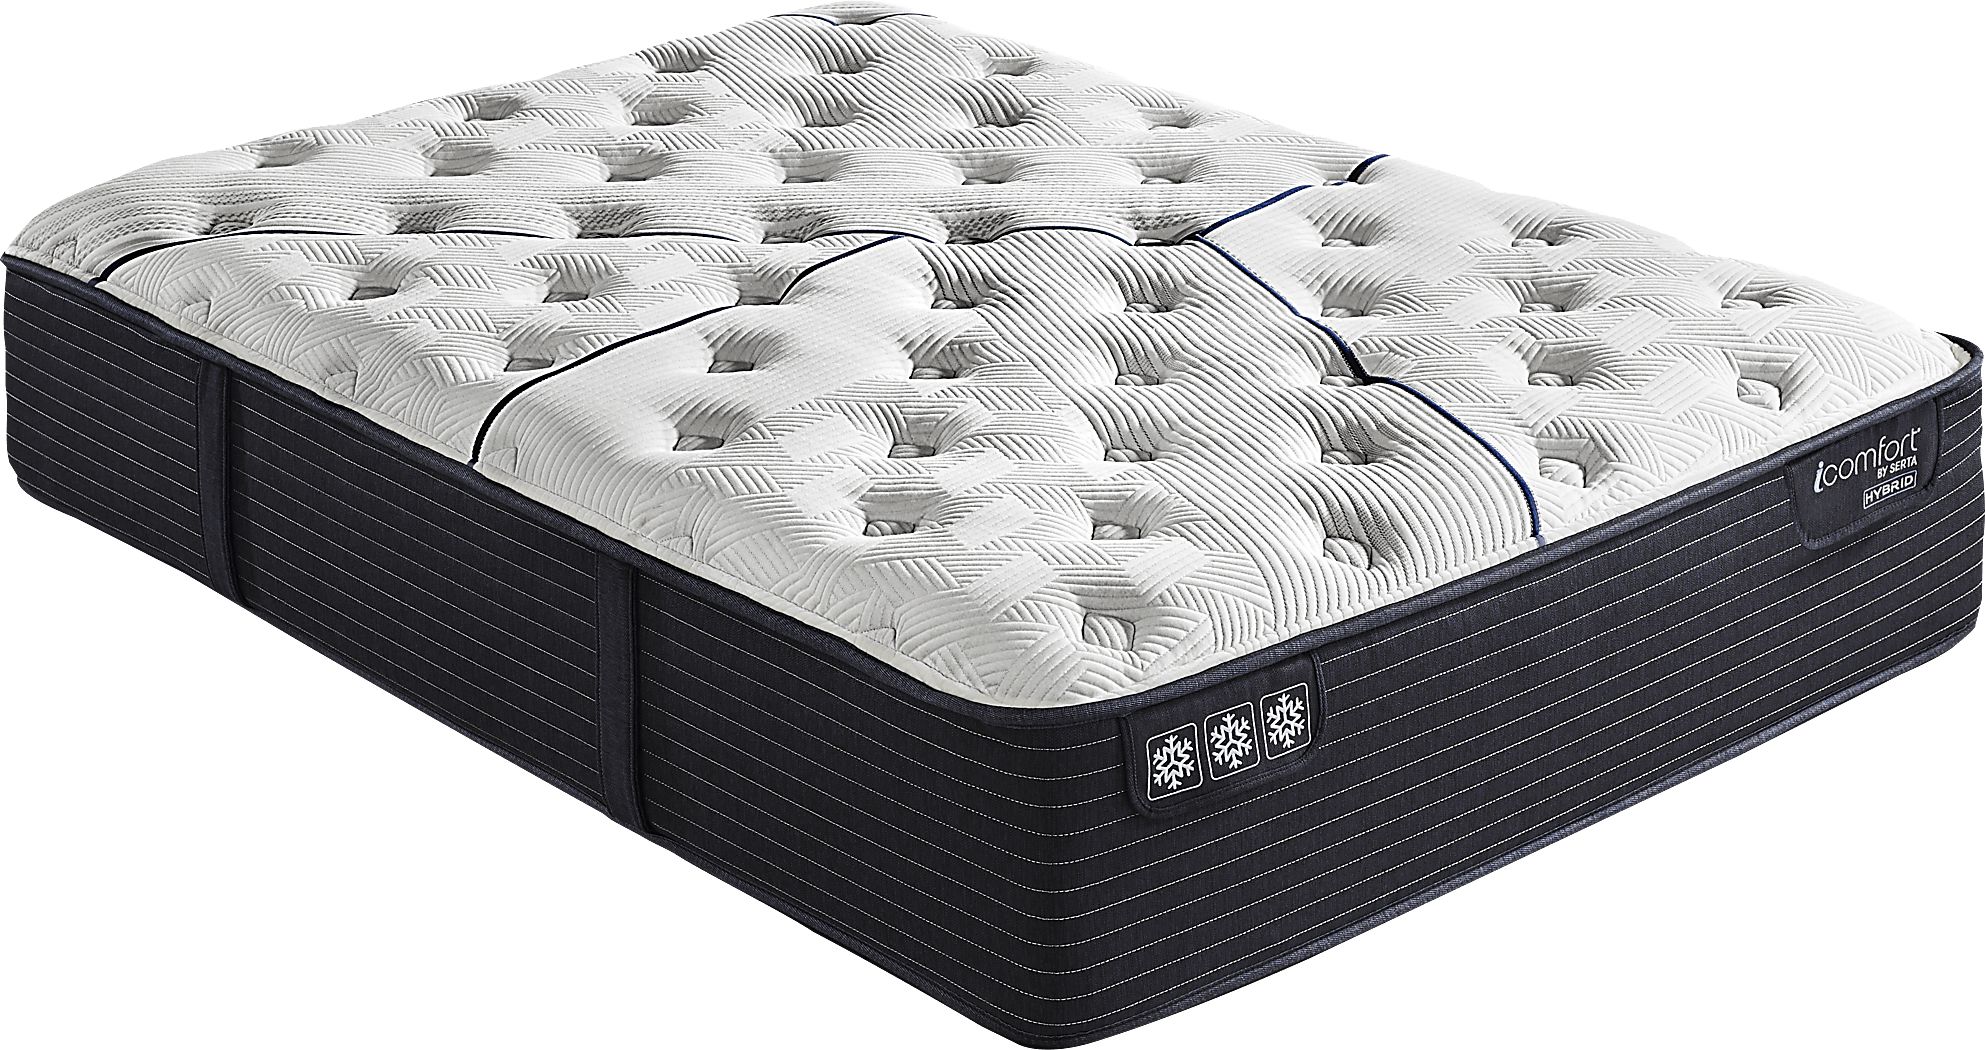 twin xl serta icomfort cf3000 plush mattress